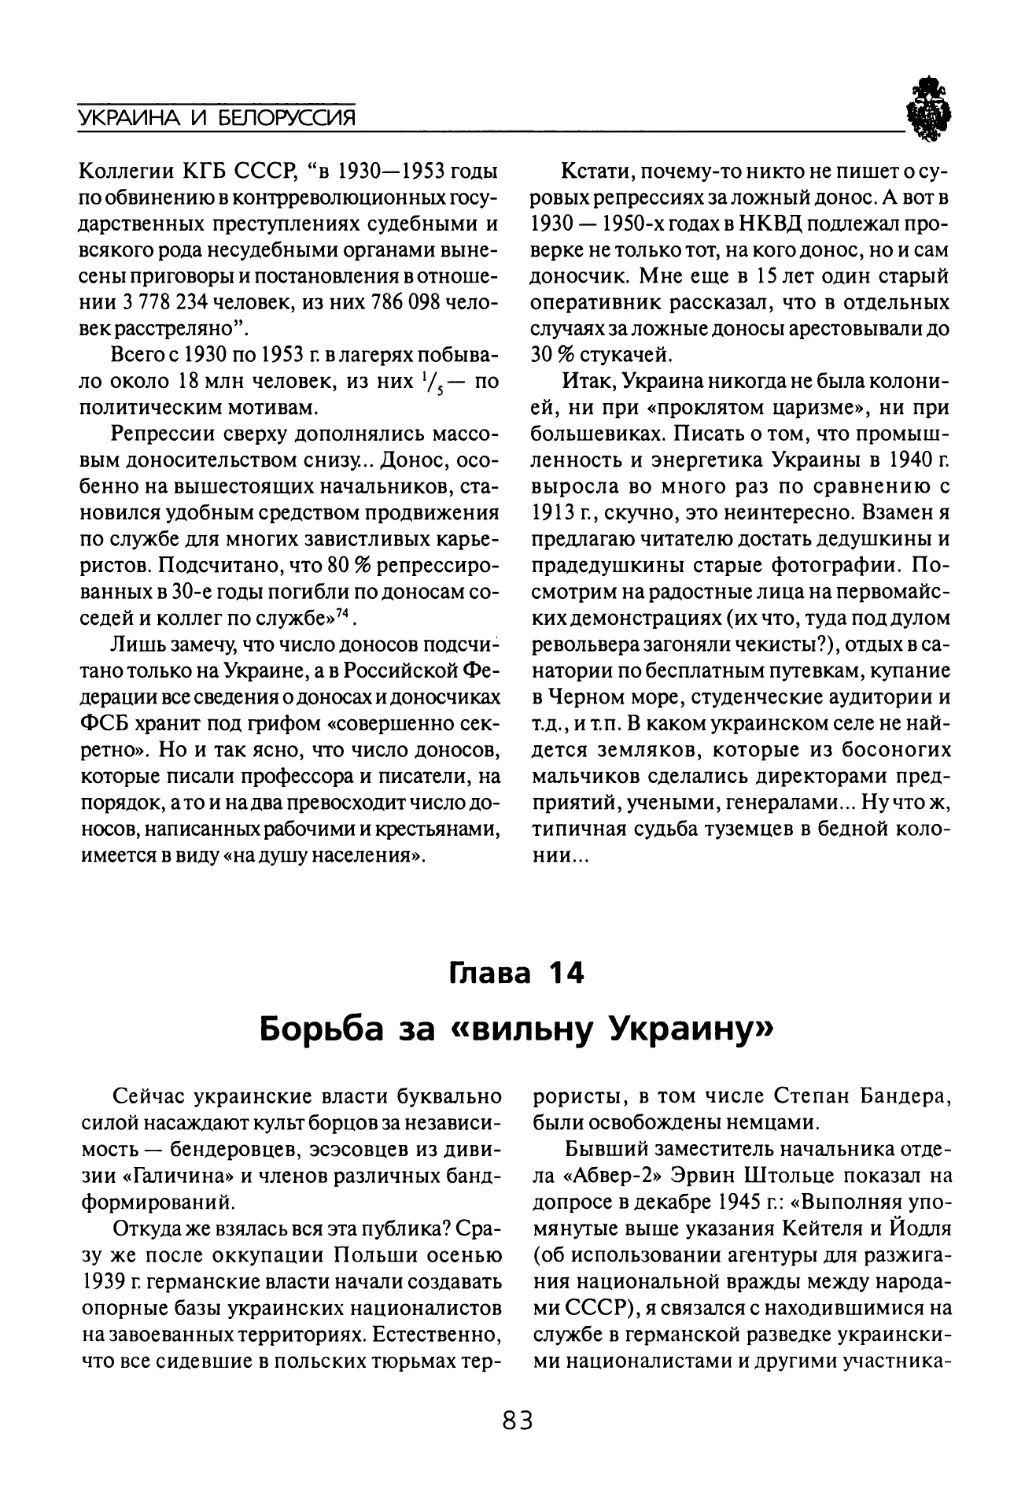 Глава  14 Борьба  за  «вильну  Украину»